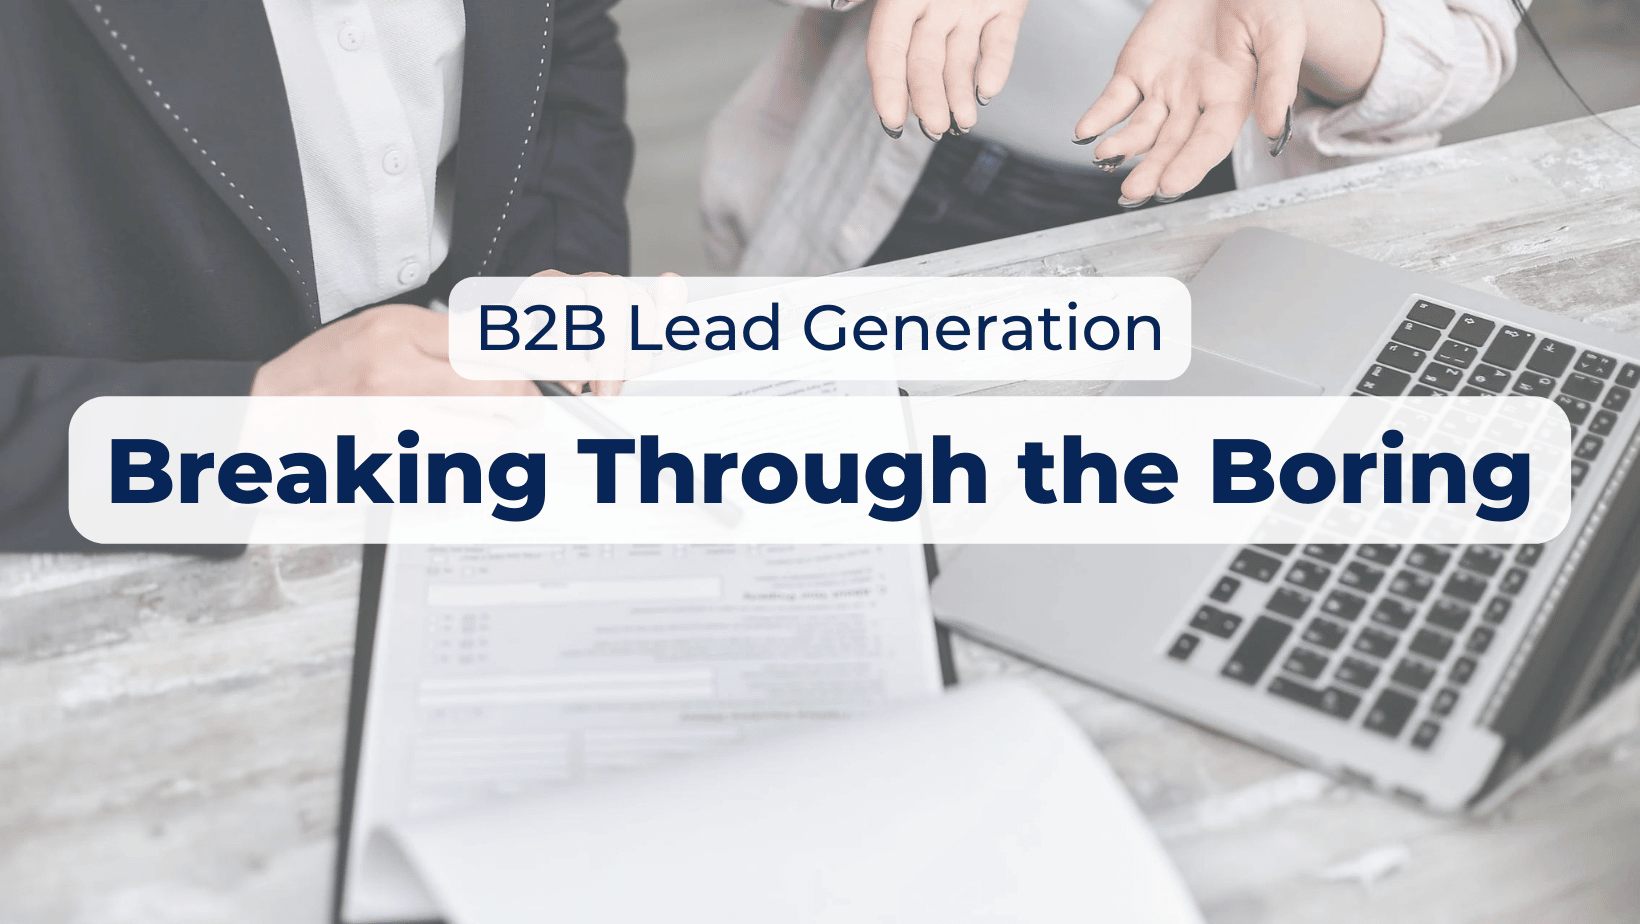 B2B Lead Generation: Breaking Through the Boring